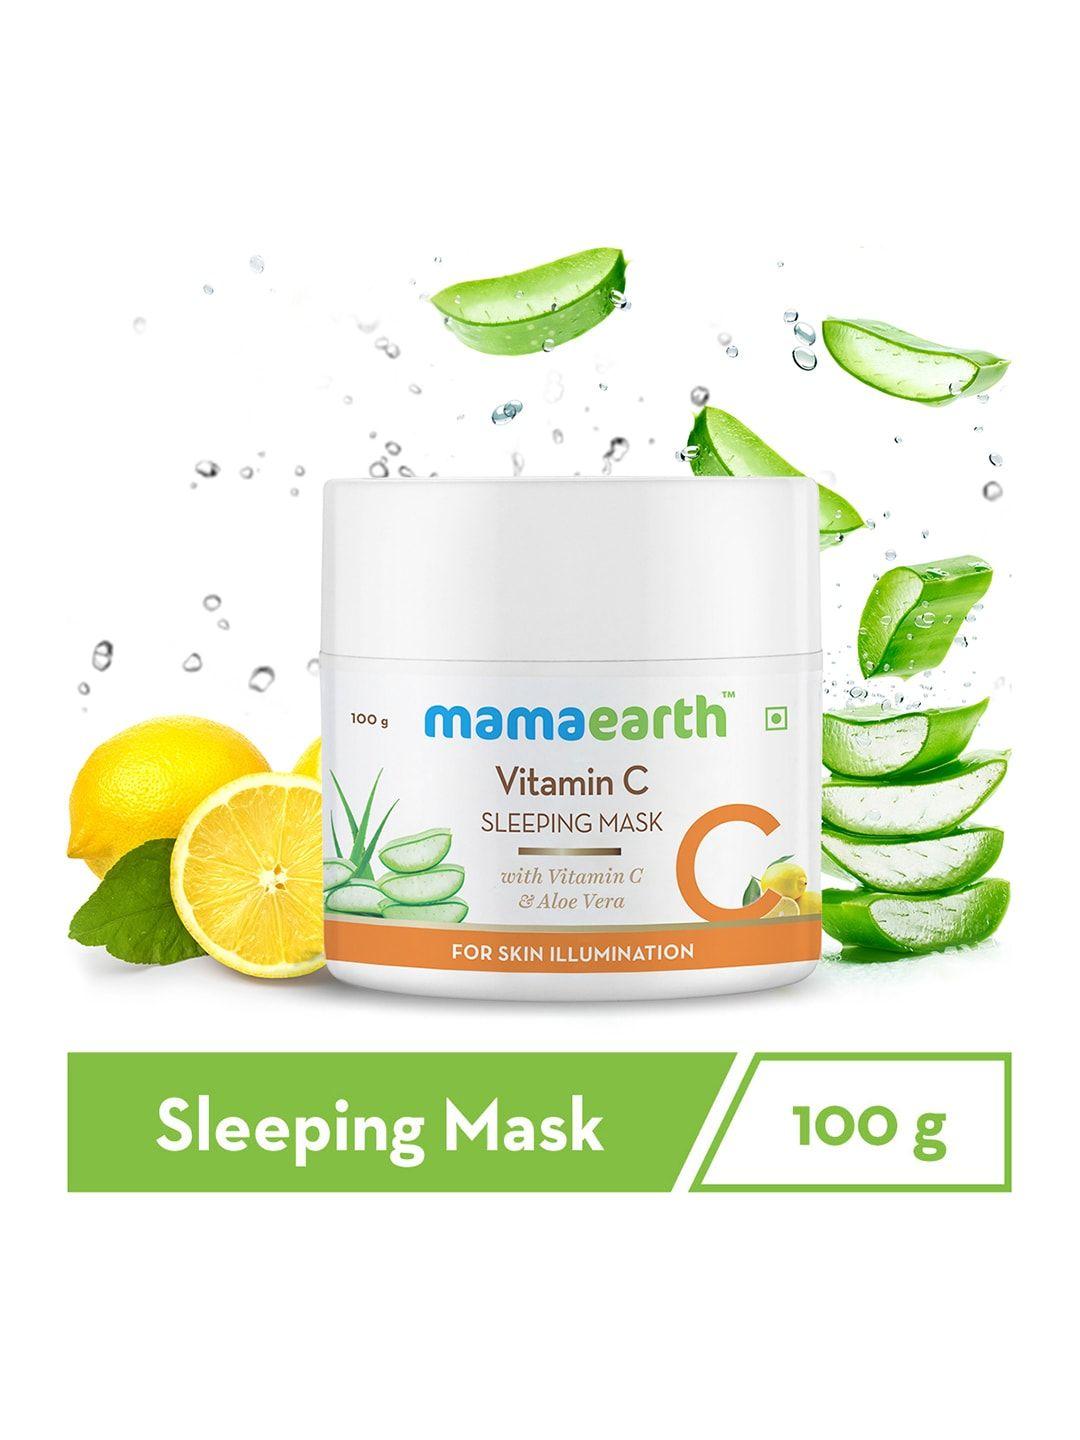 mamaearth vitamin c sustainable sleeping mask for skin illumination 100 g